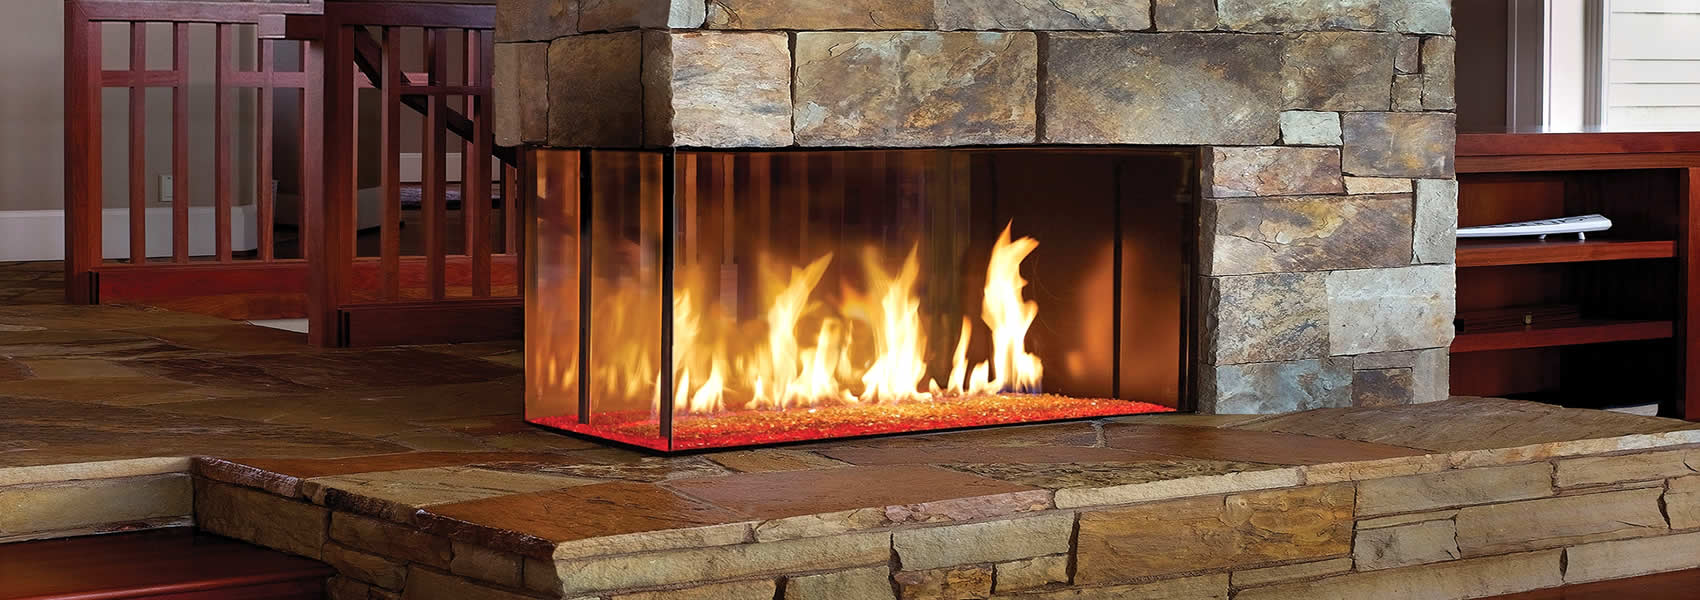 davinci gas fireplace